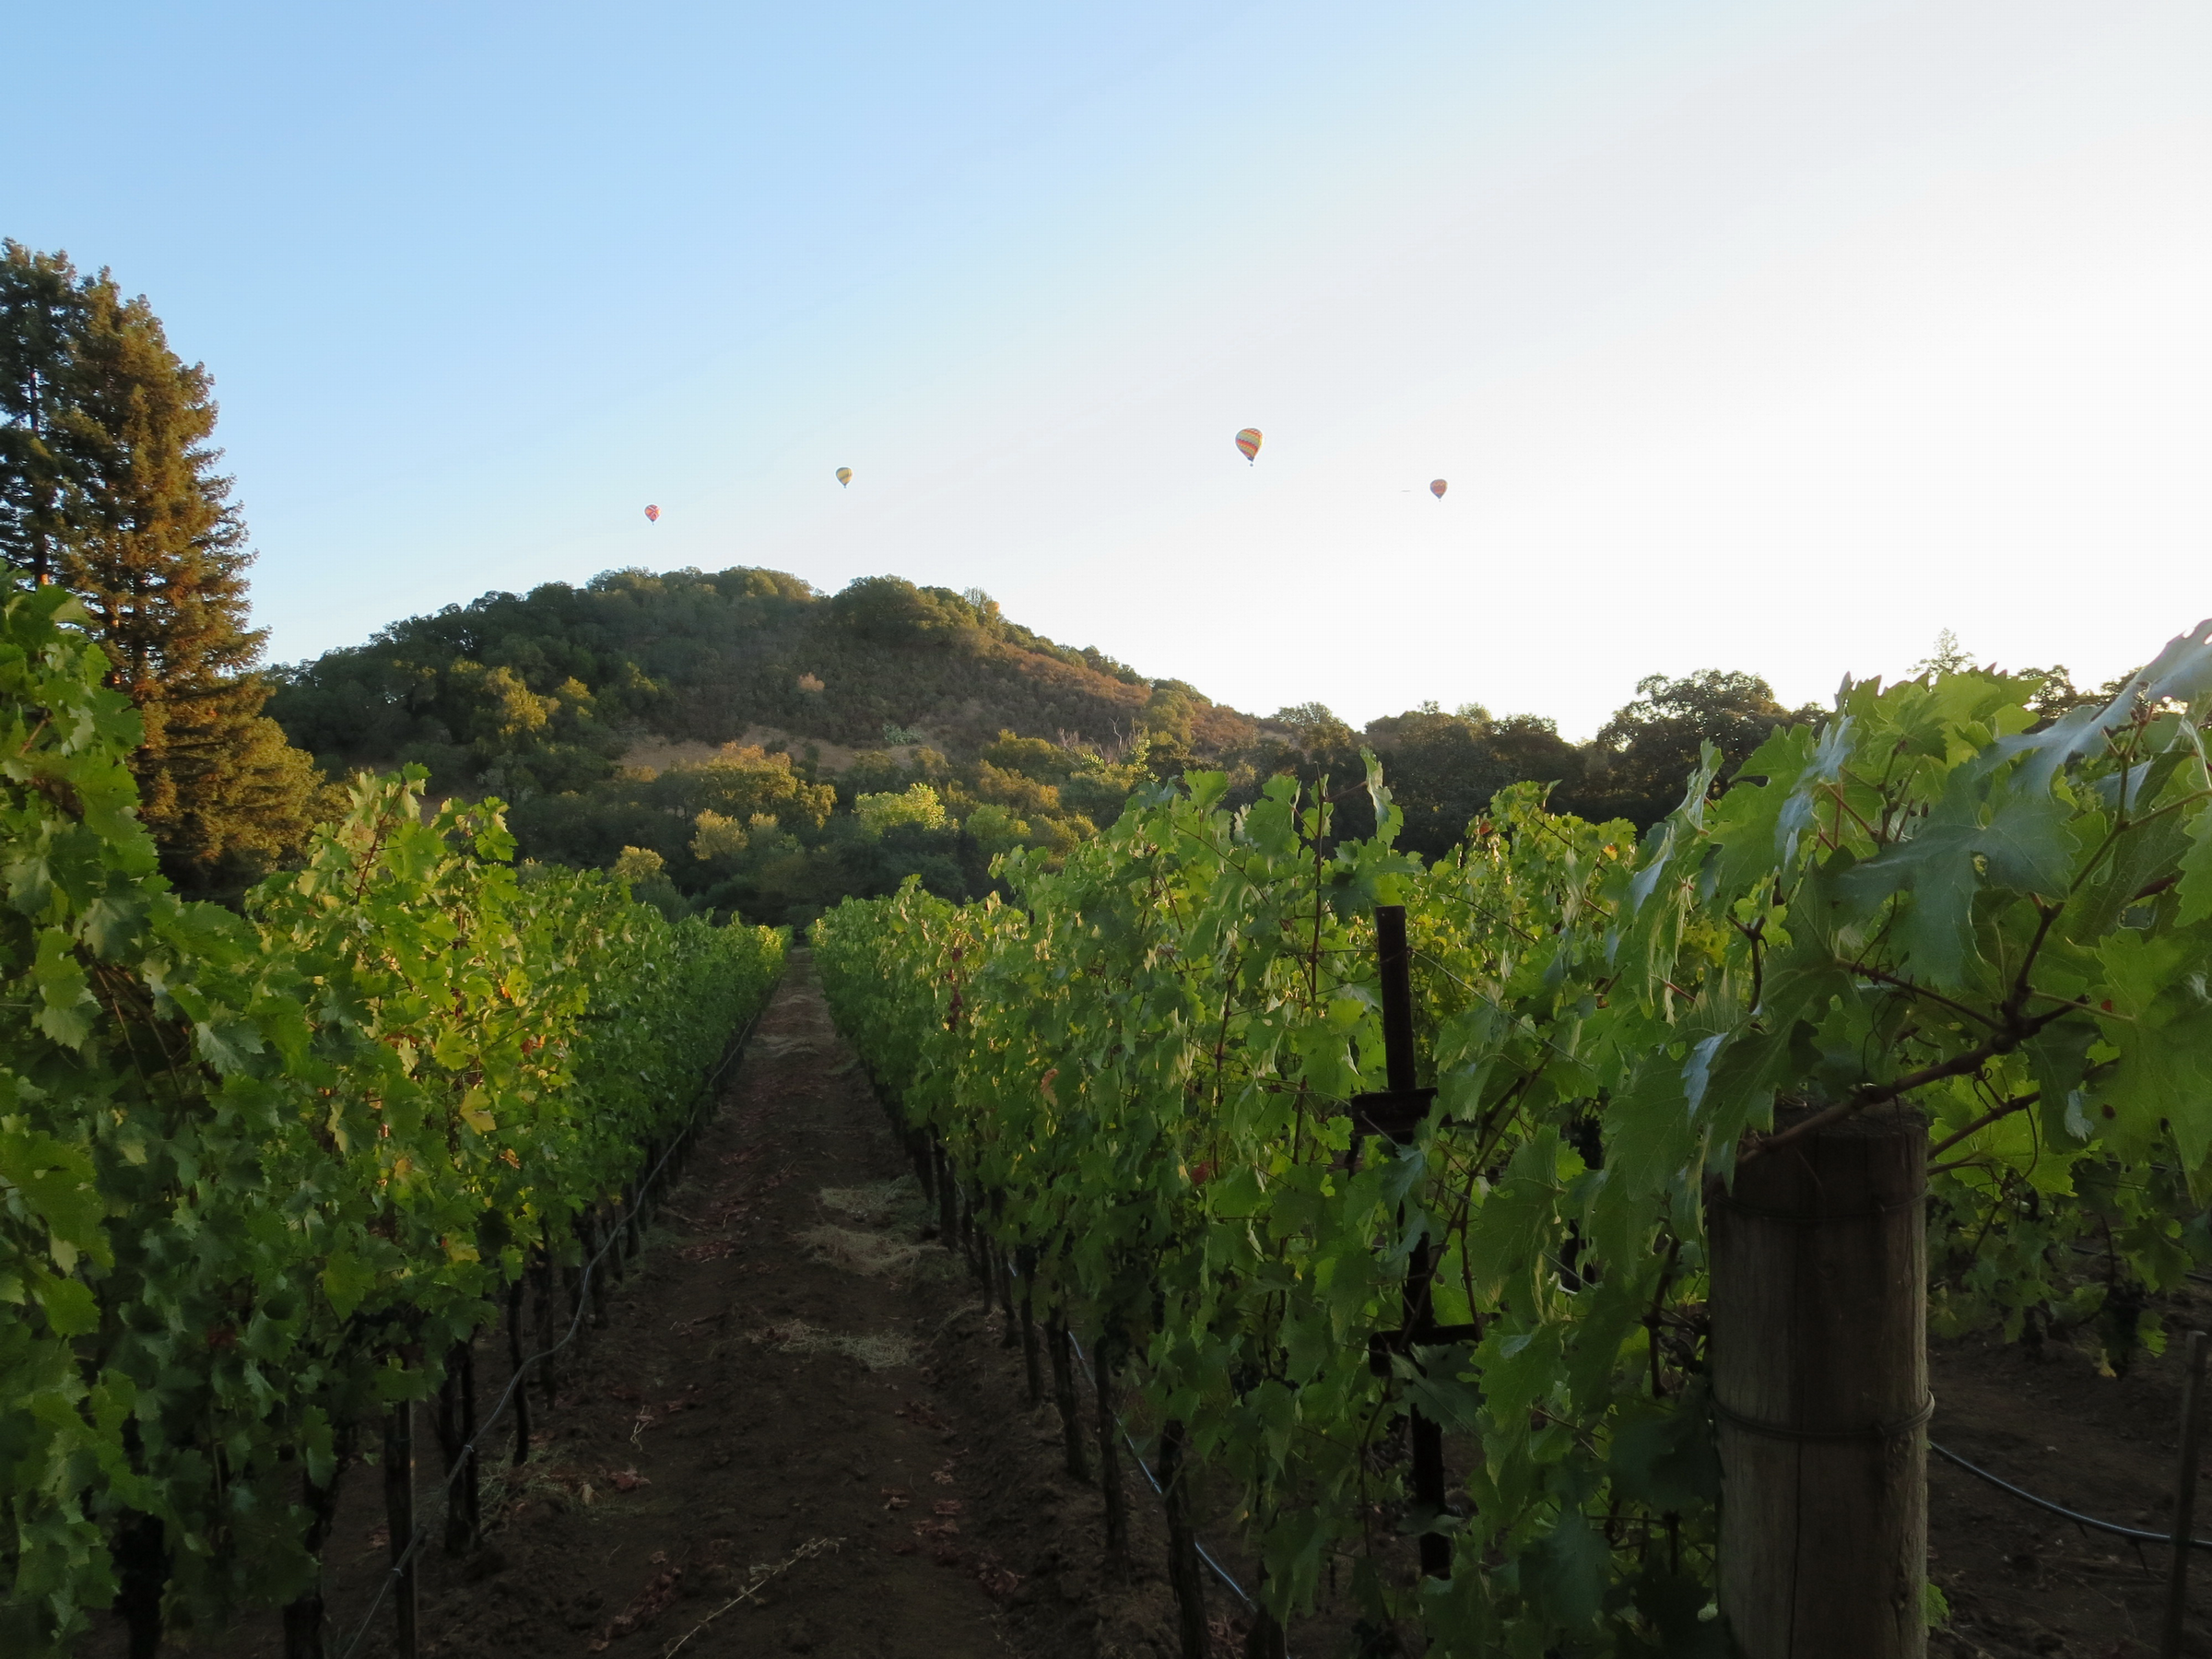 Balloons over vineyard at harvest 3 sm